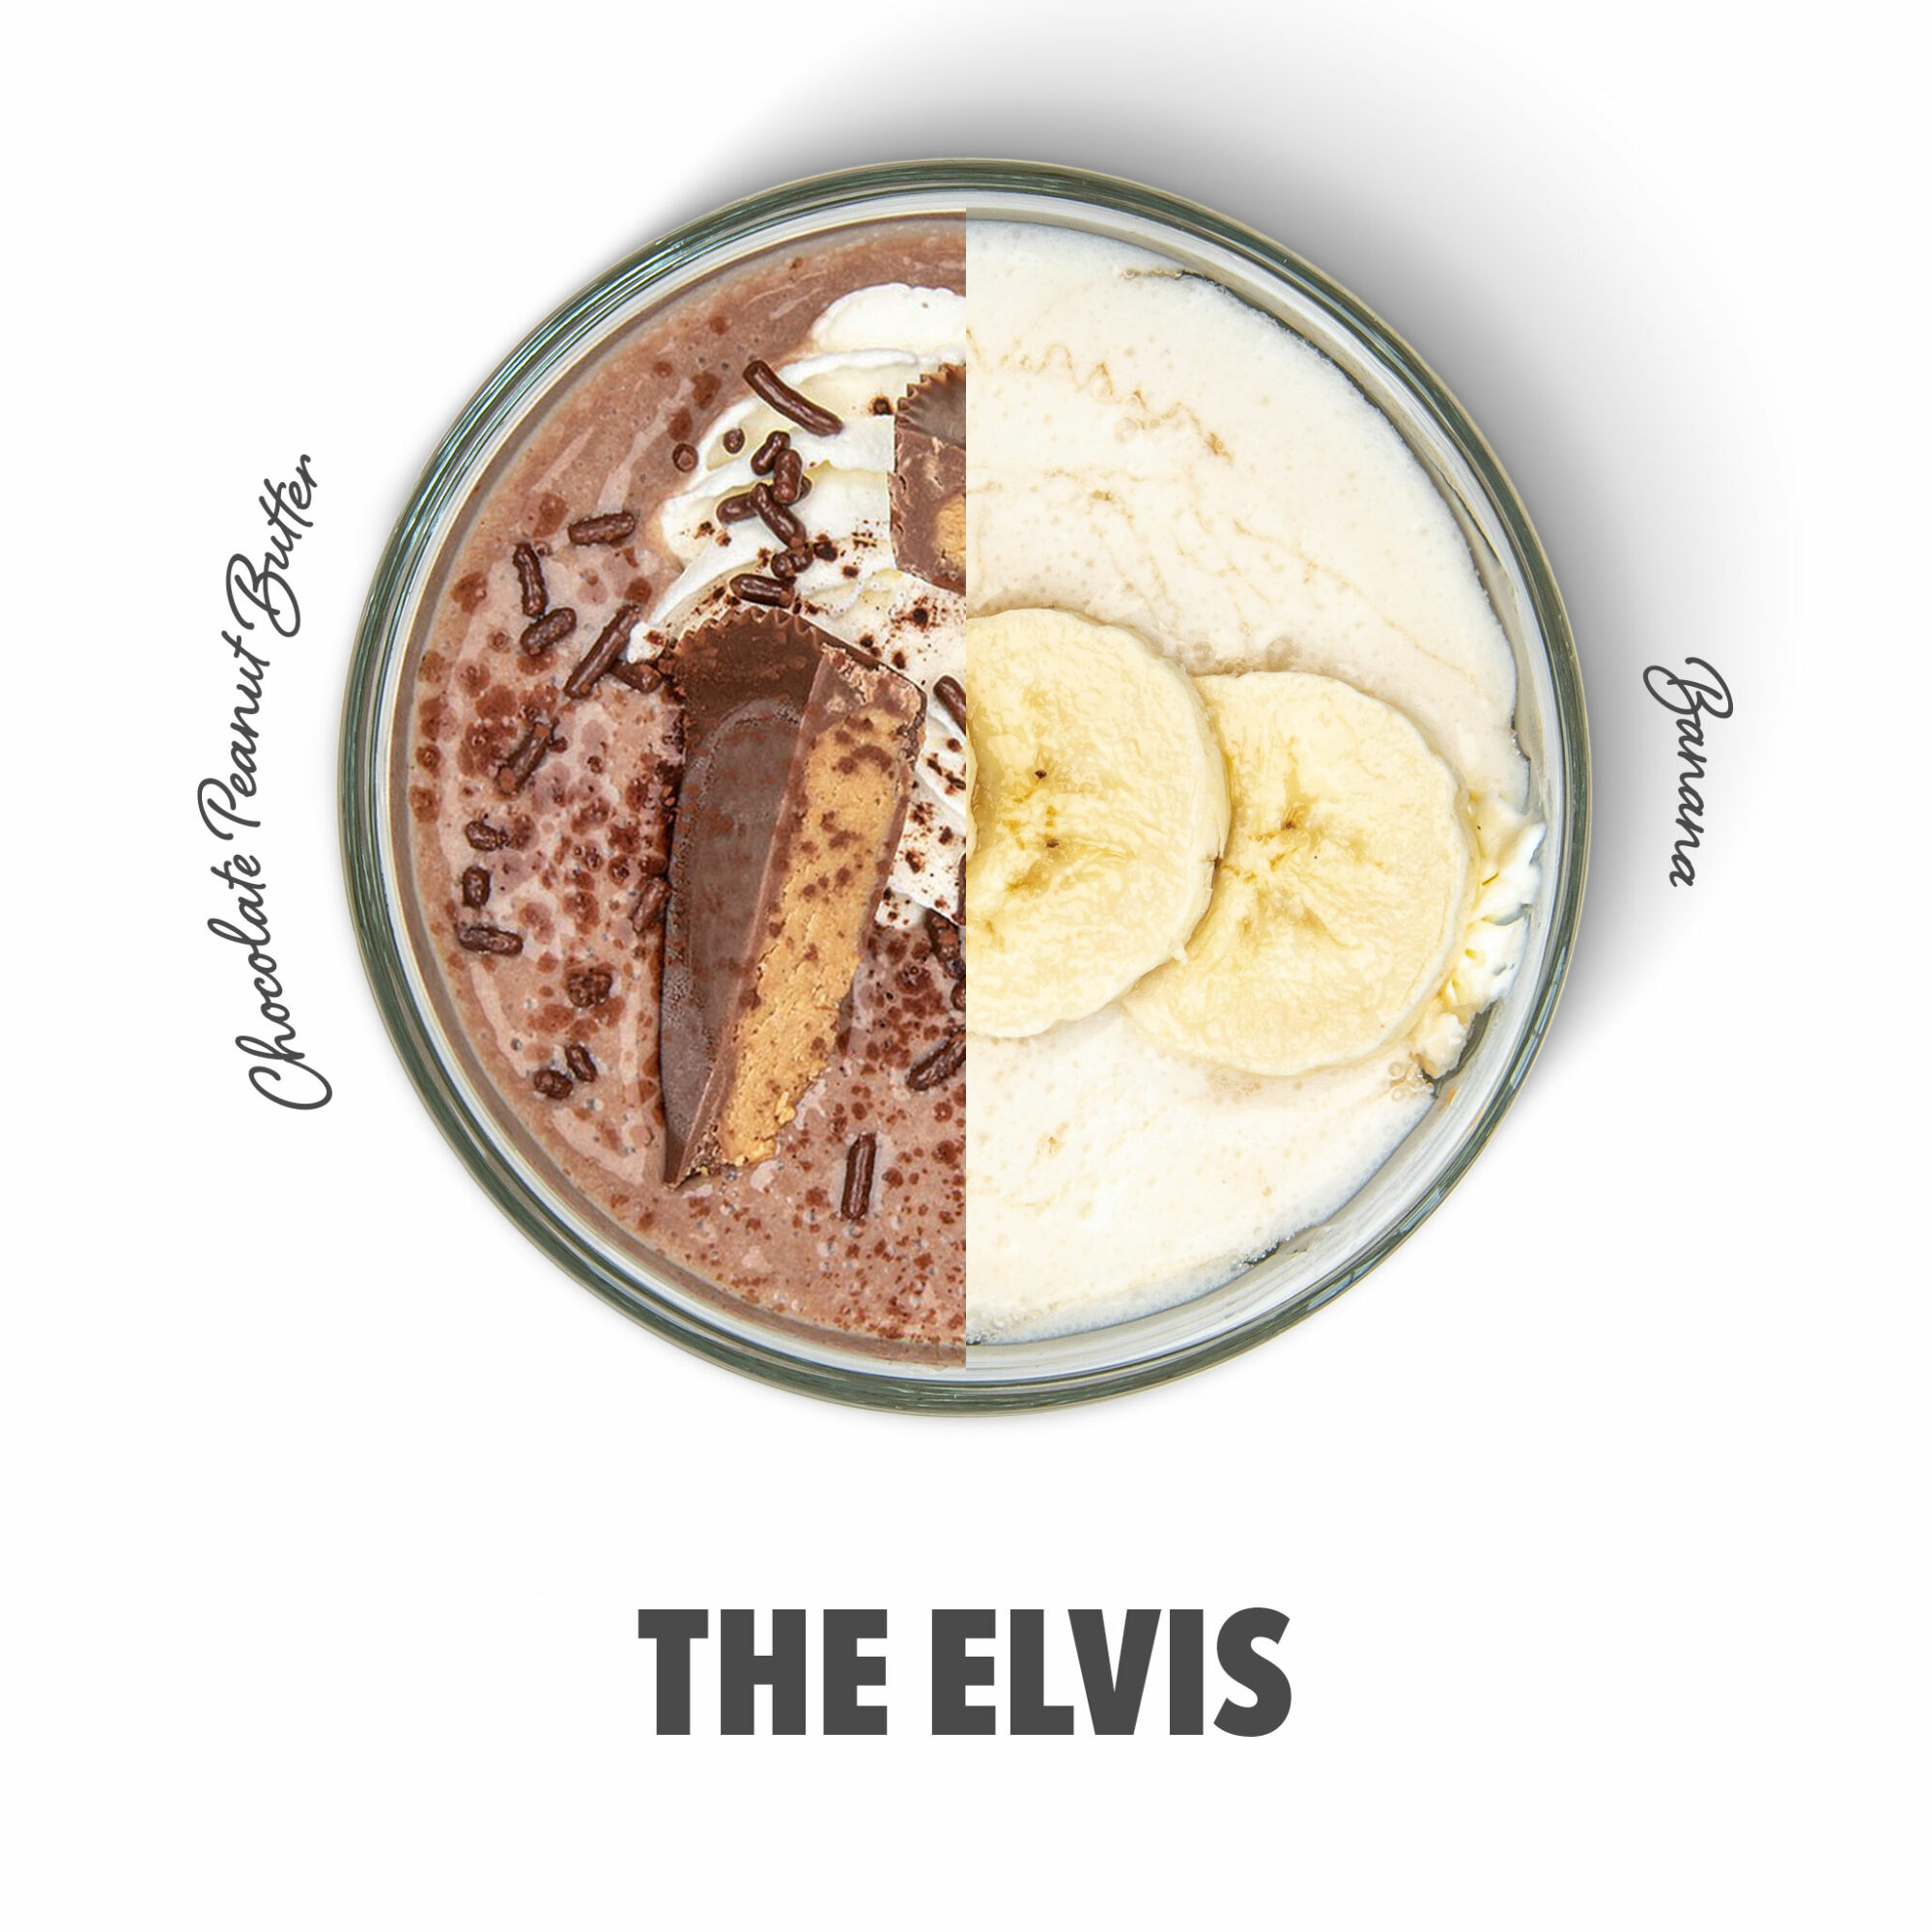 The Elvis shake image